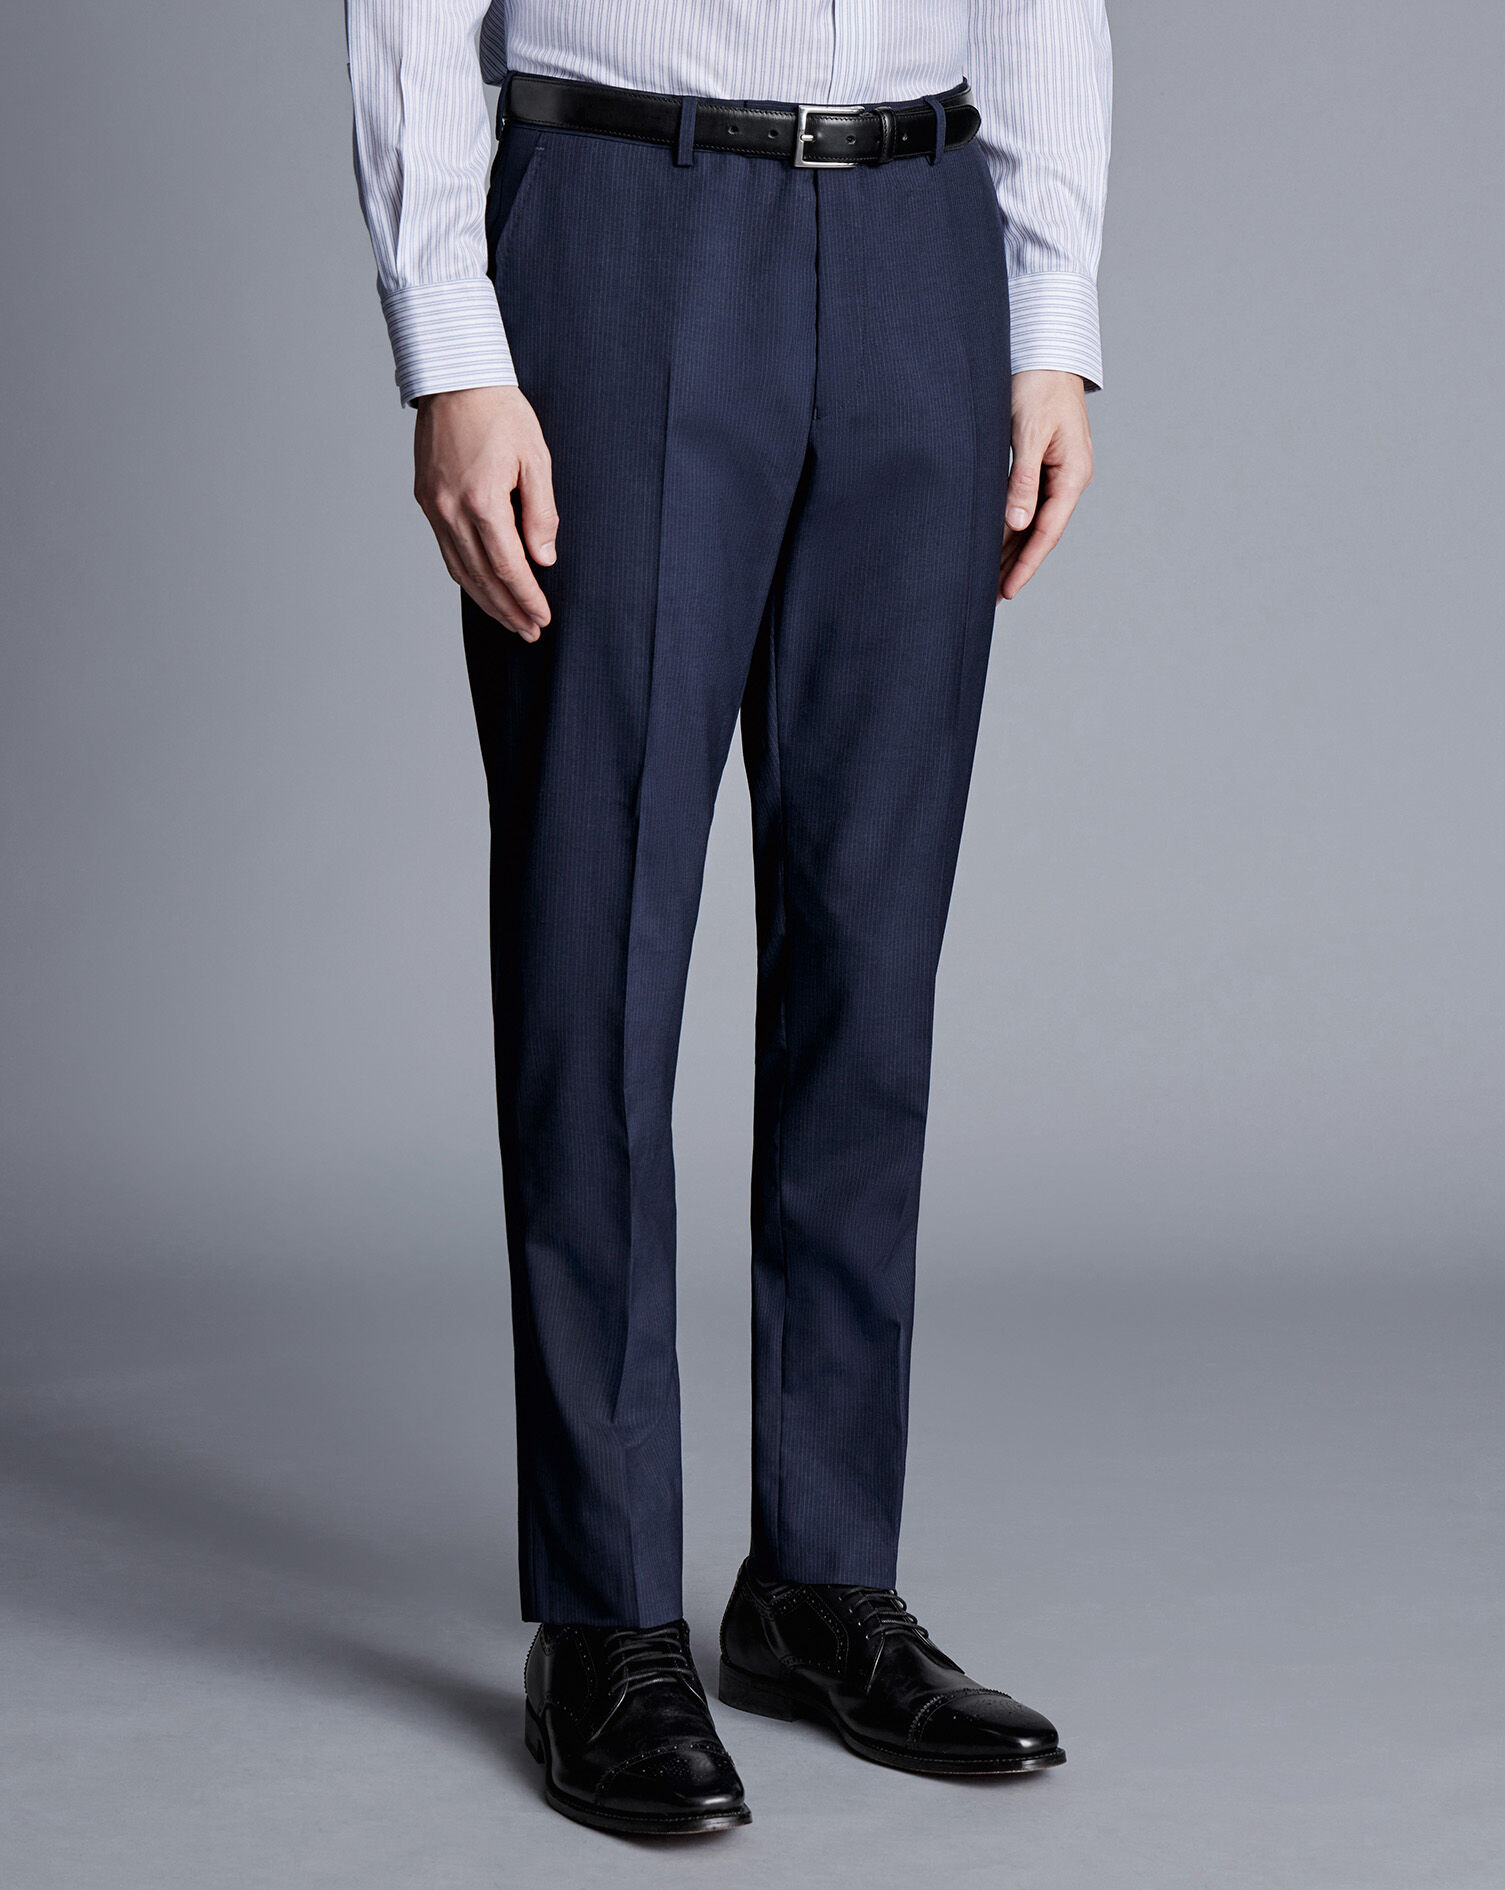 Buy Haoser Men's Cotton Blend Formal Trouser (HI-TRNavy3_Navy Blue_28) Pack  of 1 at Amazon.in